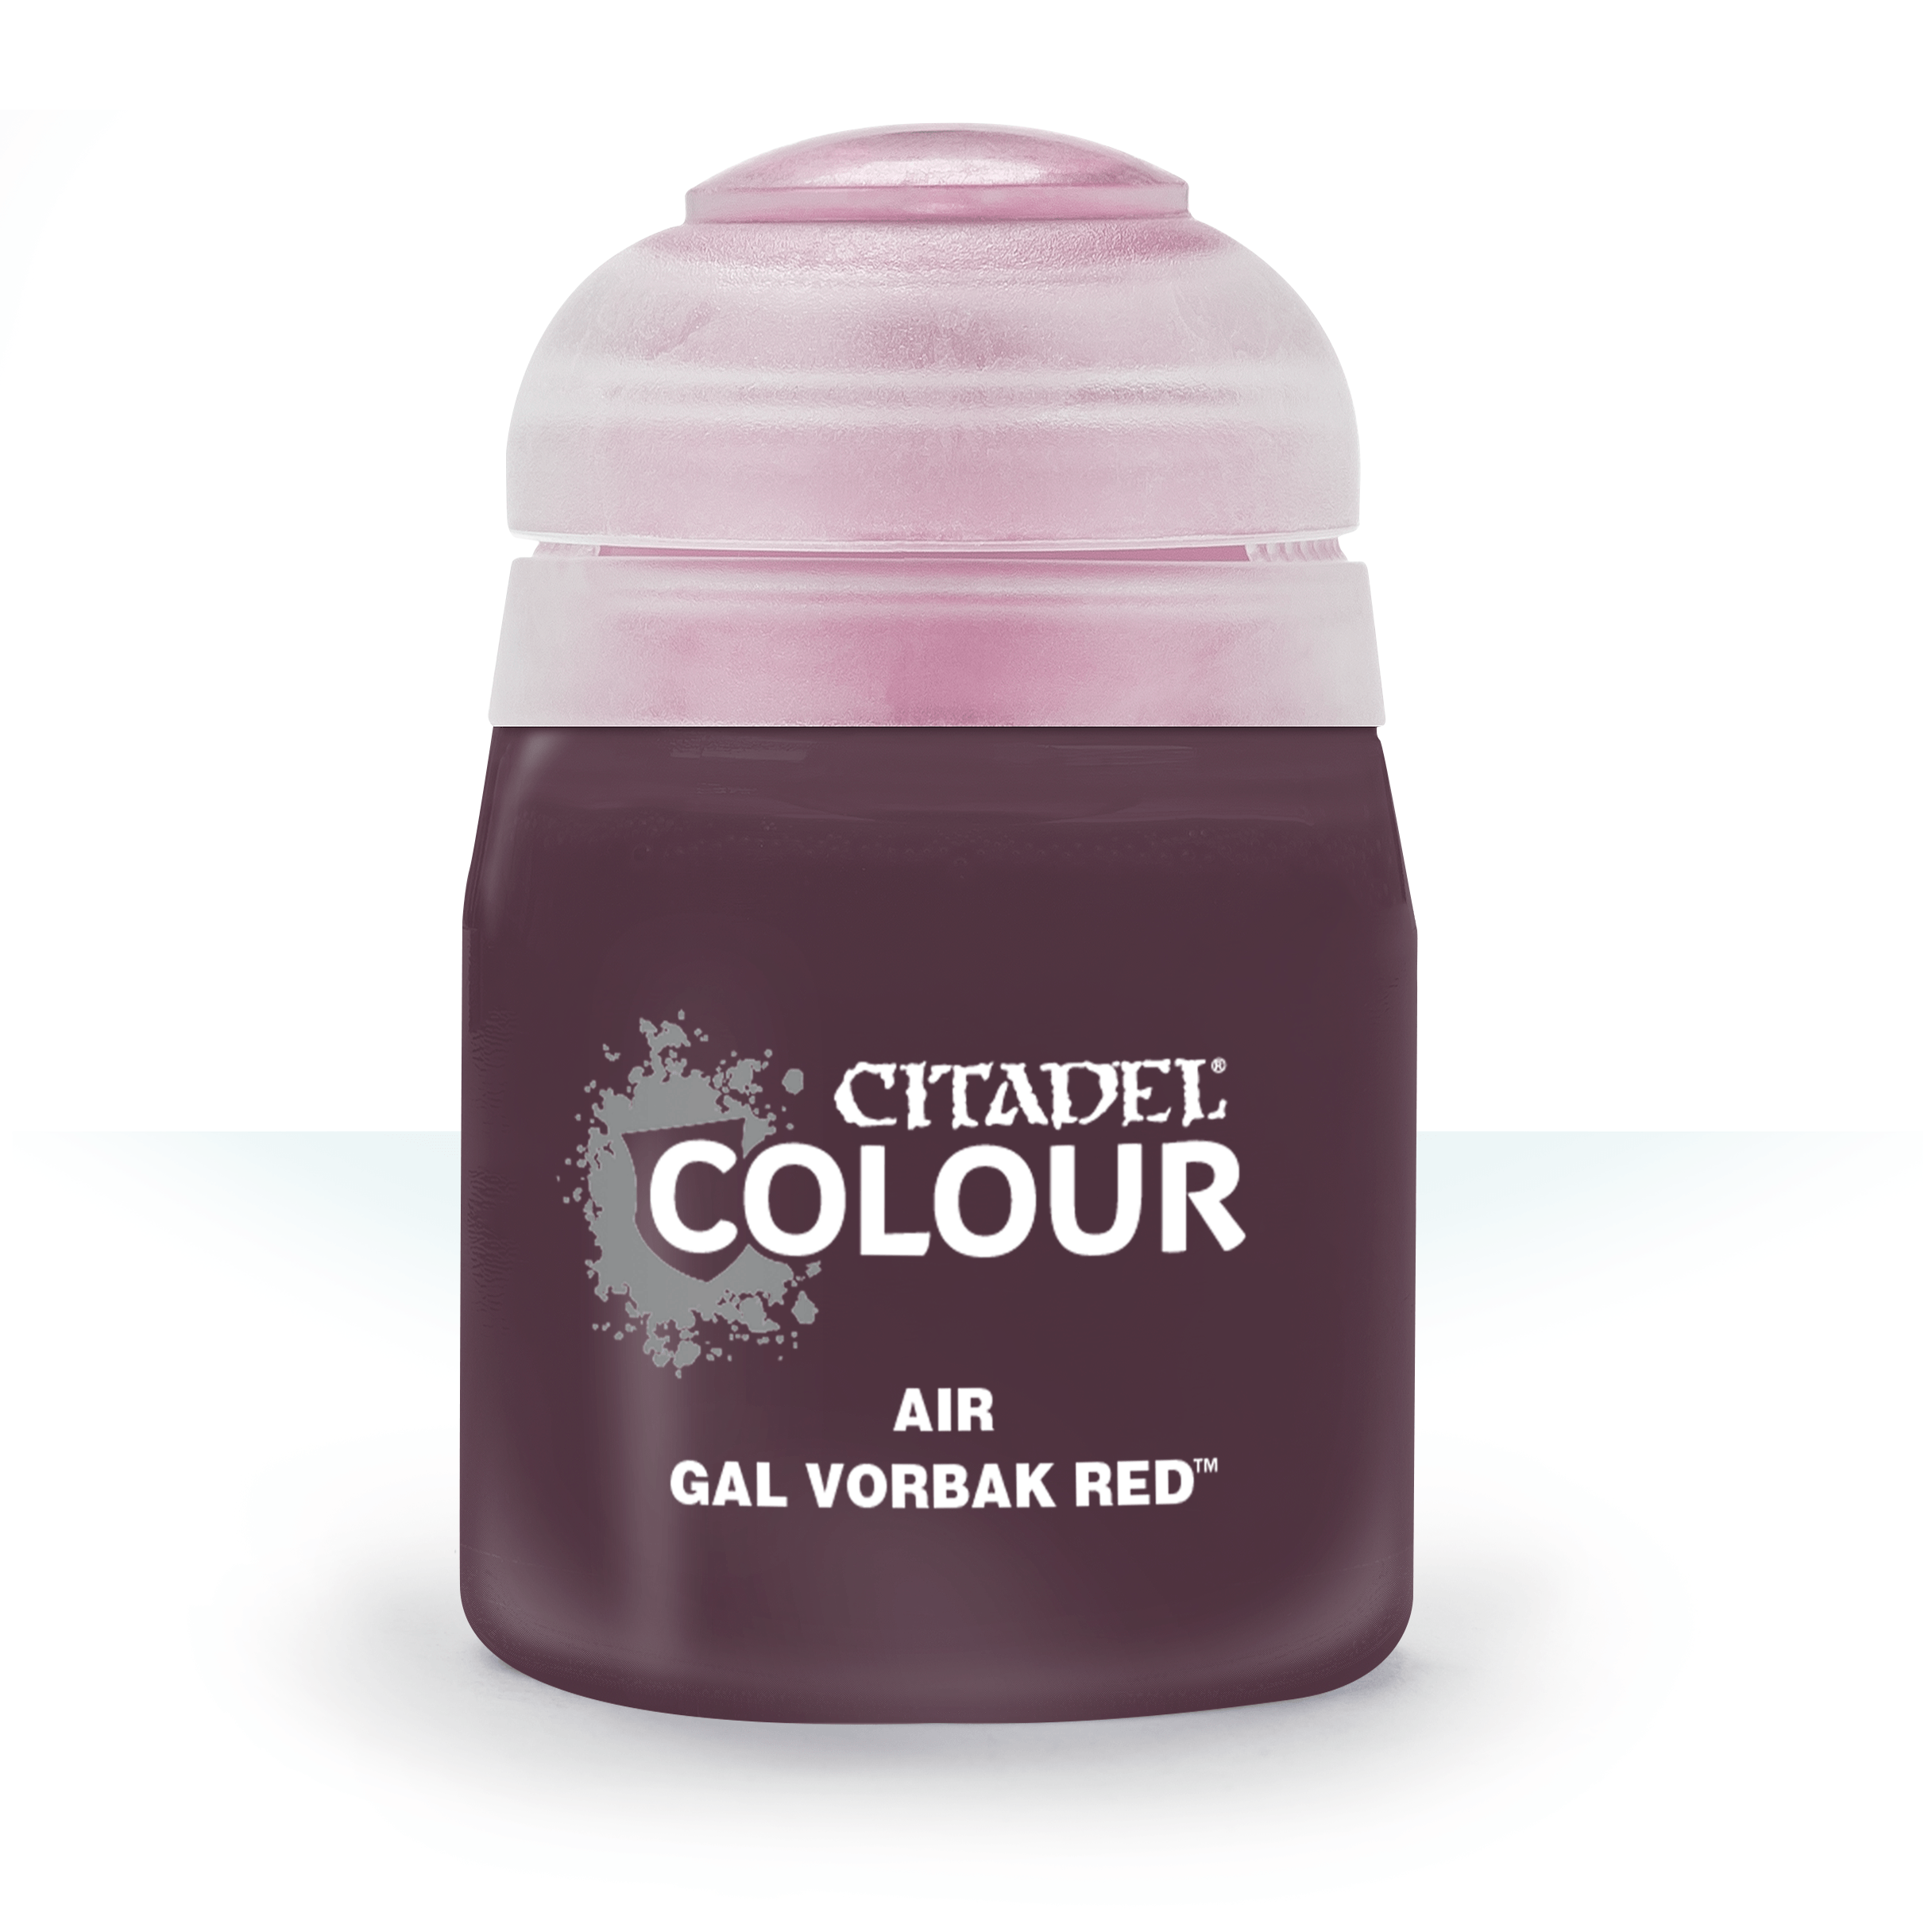 Air Gal Vorbak Red (Discontinued color)